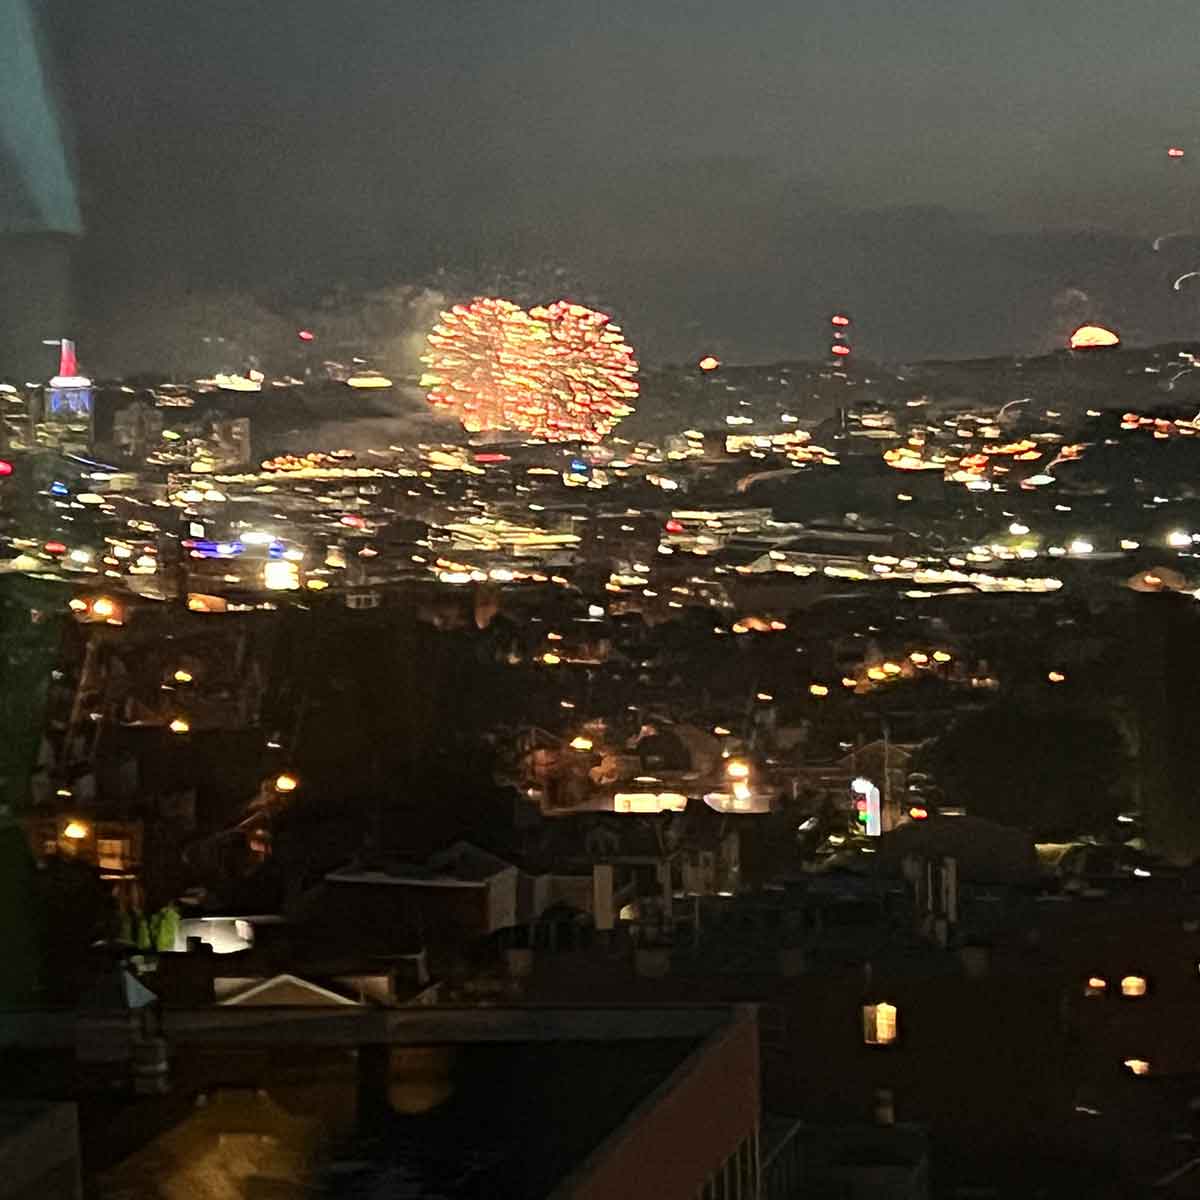 Fireworks over a city skyline.